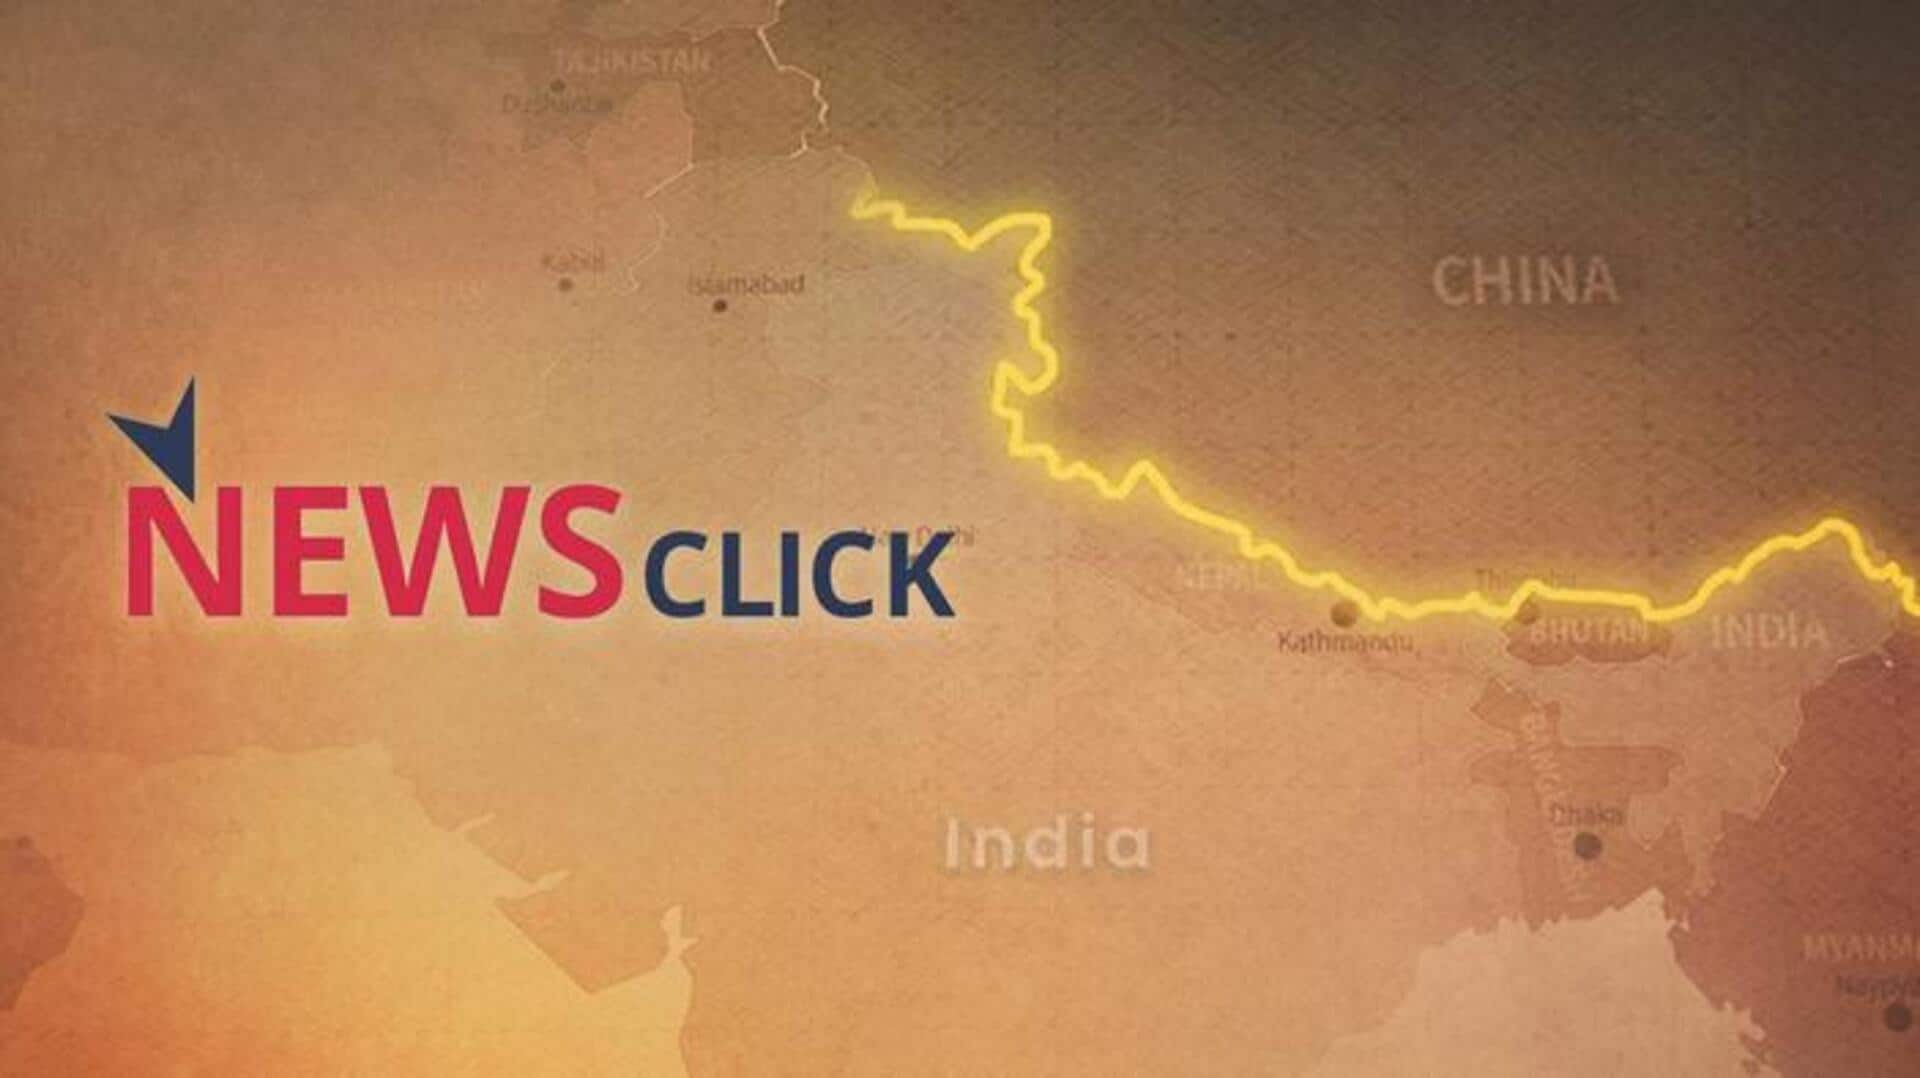 News Click: కశ్మీర్, అరుణాచల్‌లు భారతదేశంలో భాగం కావని న్యూస్‌క్లిక్ ప్రమోట్ చేసింది : పోలీసులు 